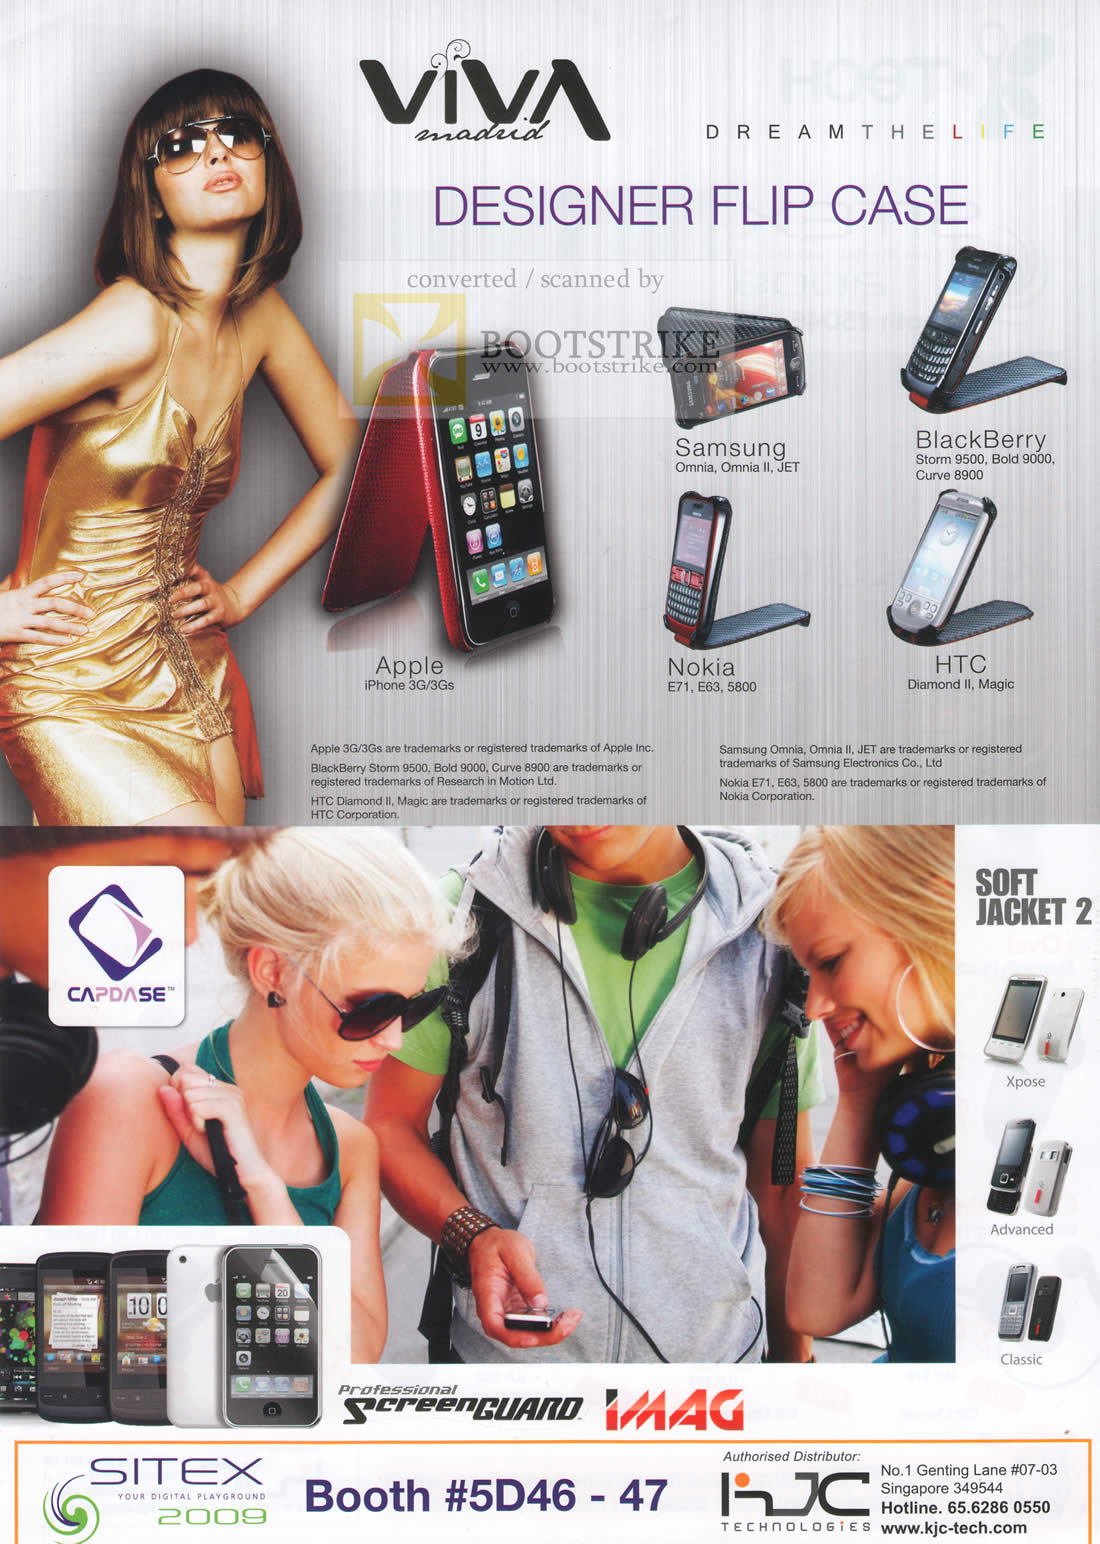 Sitex 2009 price list image brochure of ITech Designer Flip Case Apple Samsung Nokia HTC Blackberry ScreenGuard VAAG Soft Jacket 2